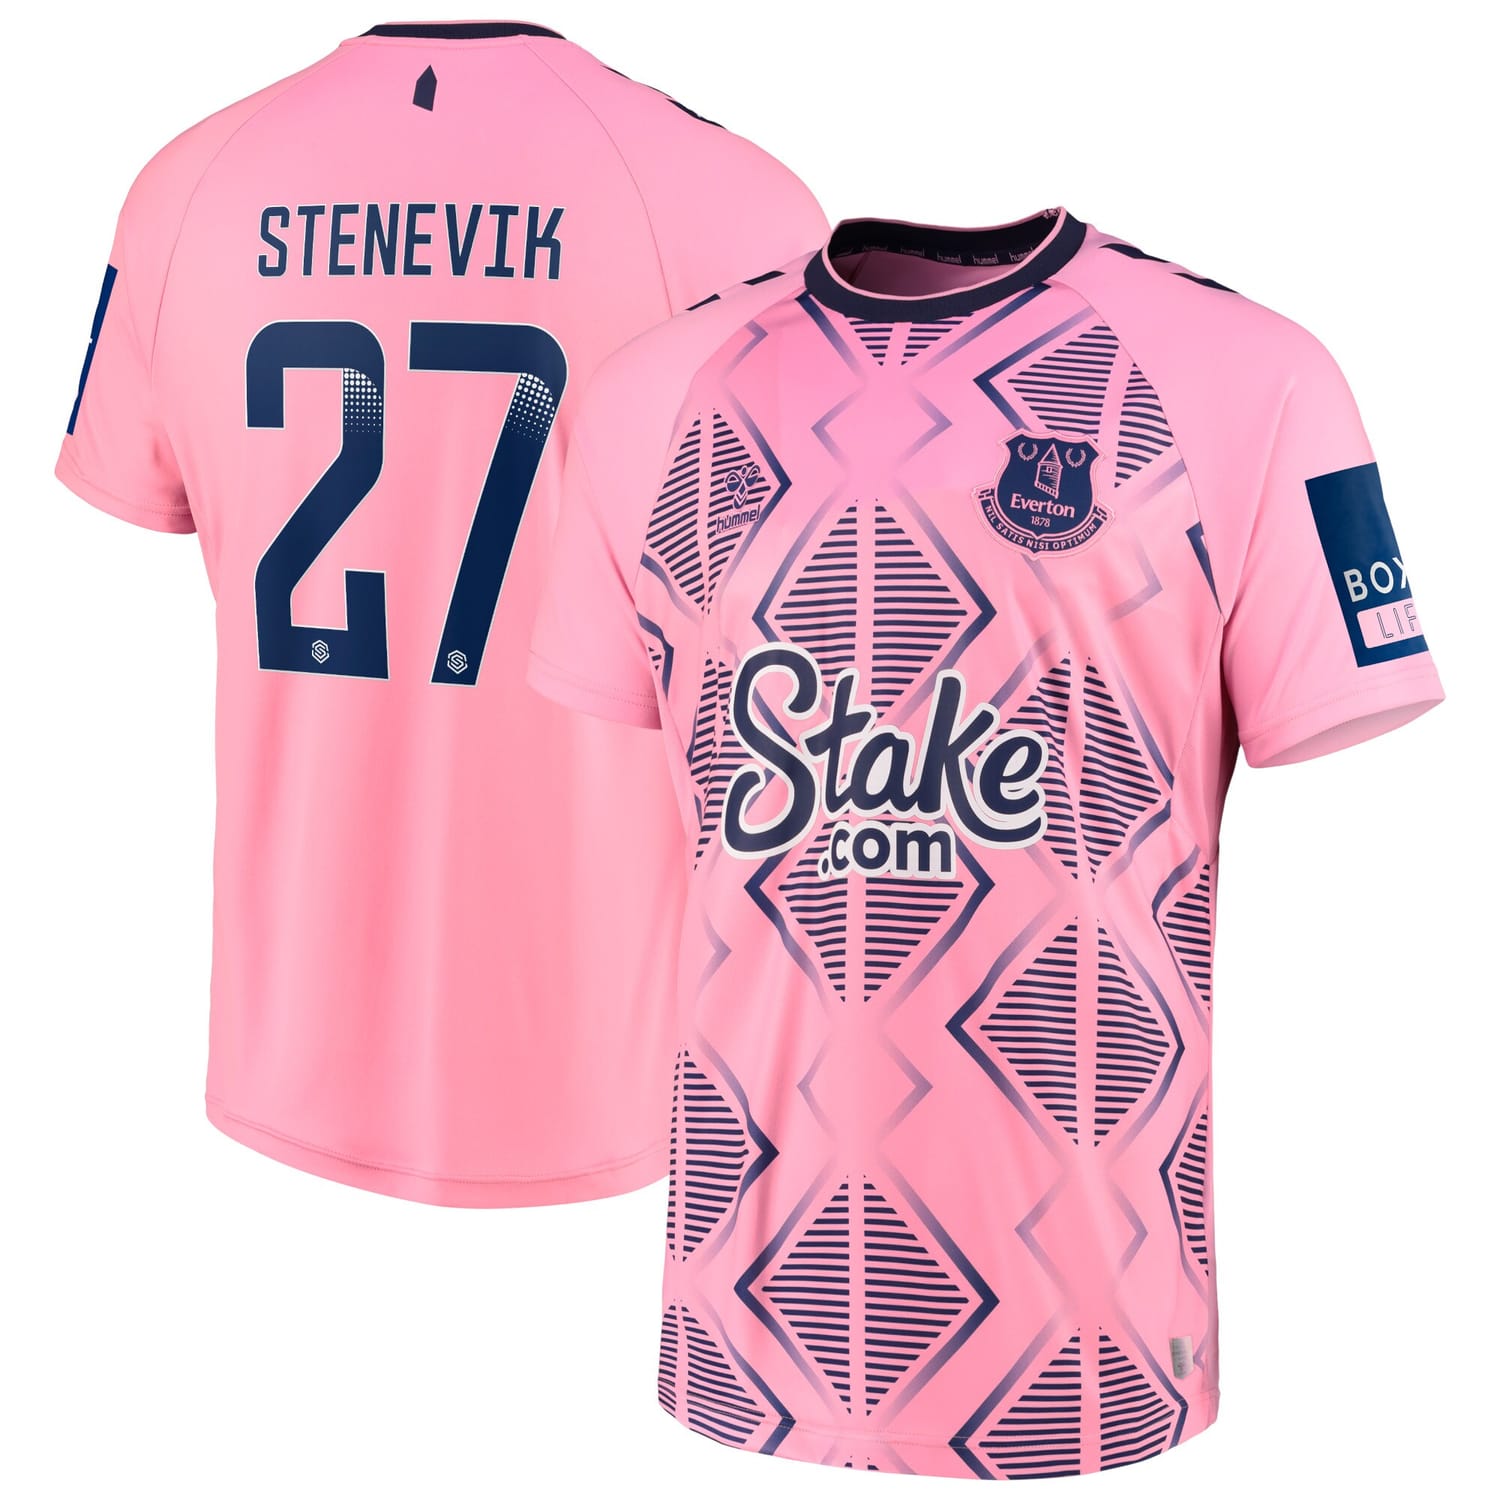 Premier League Everton Away WSL Jersey Shirt 2022-23 player Elise Stenevik 27 printing for Men